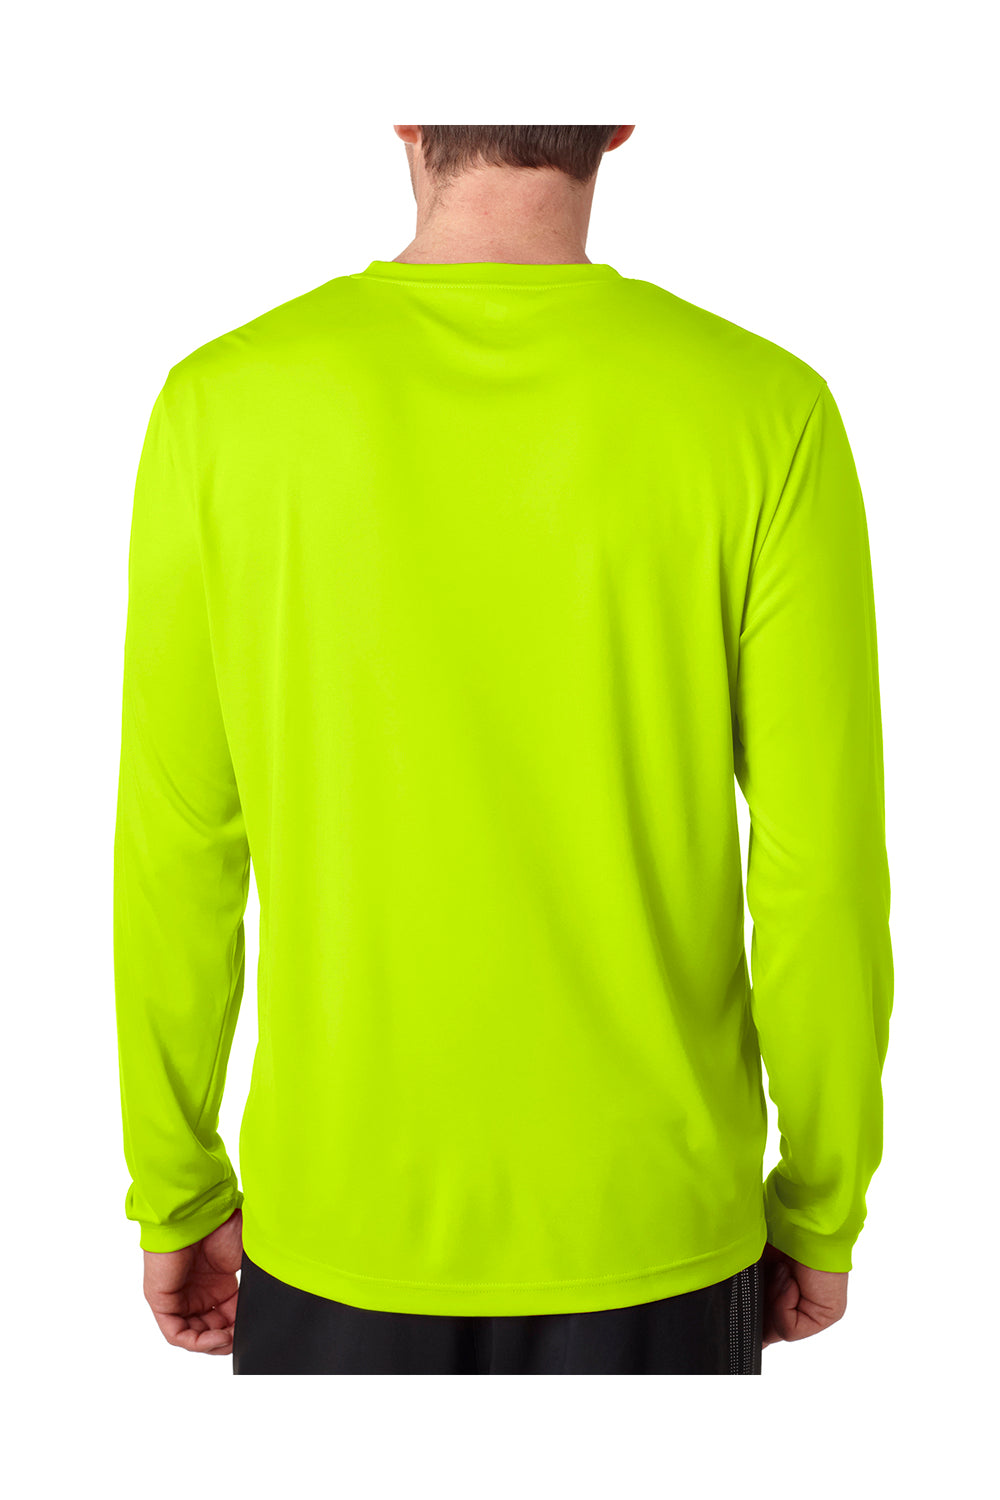 Hanes 482L Mens Cool DRI FreshIQ Moisture Wicking Long Sleeve Crewneck T-Shirt Safety Green Back